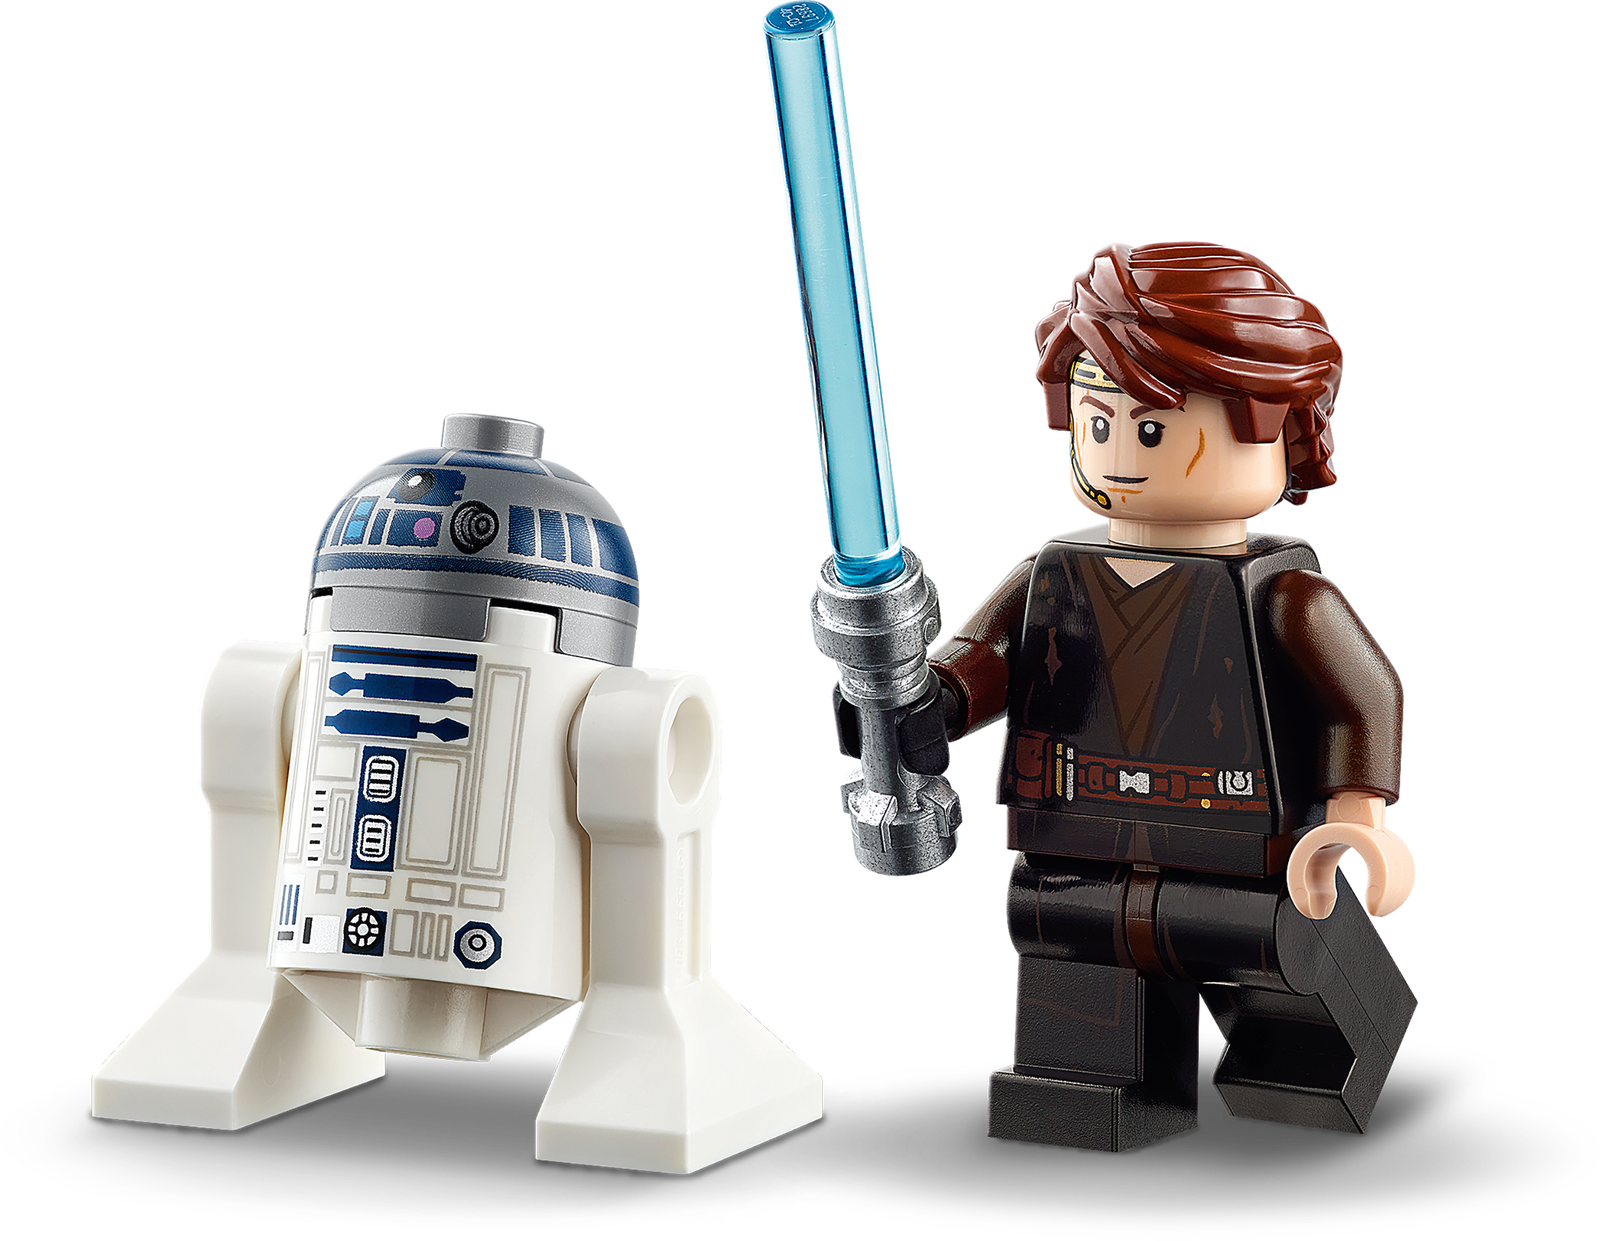 Lego Star Wars Anakin's Jedi Interceptor